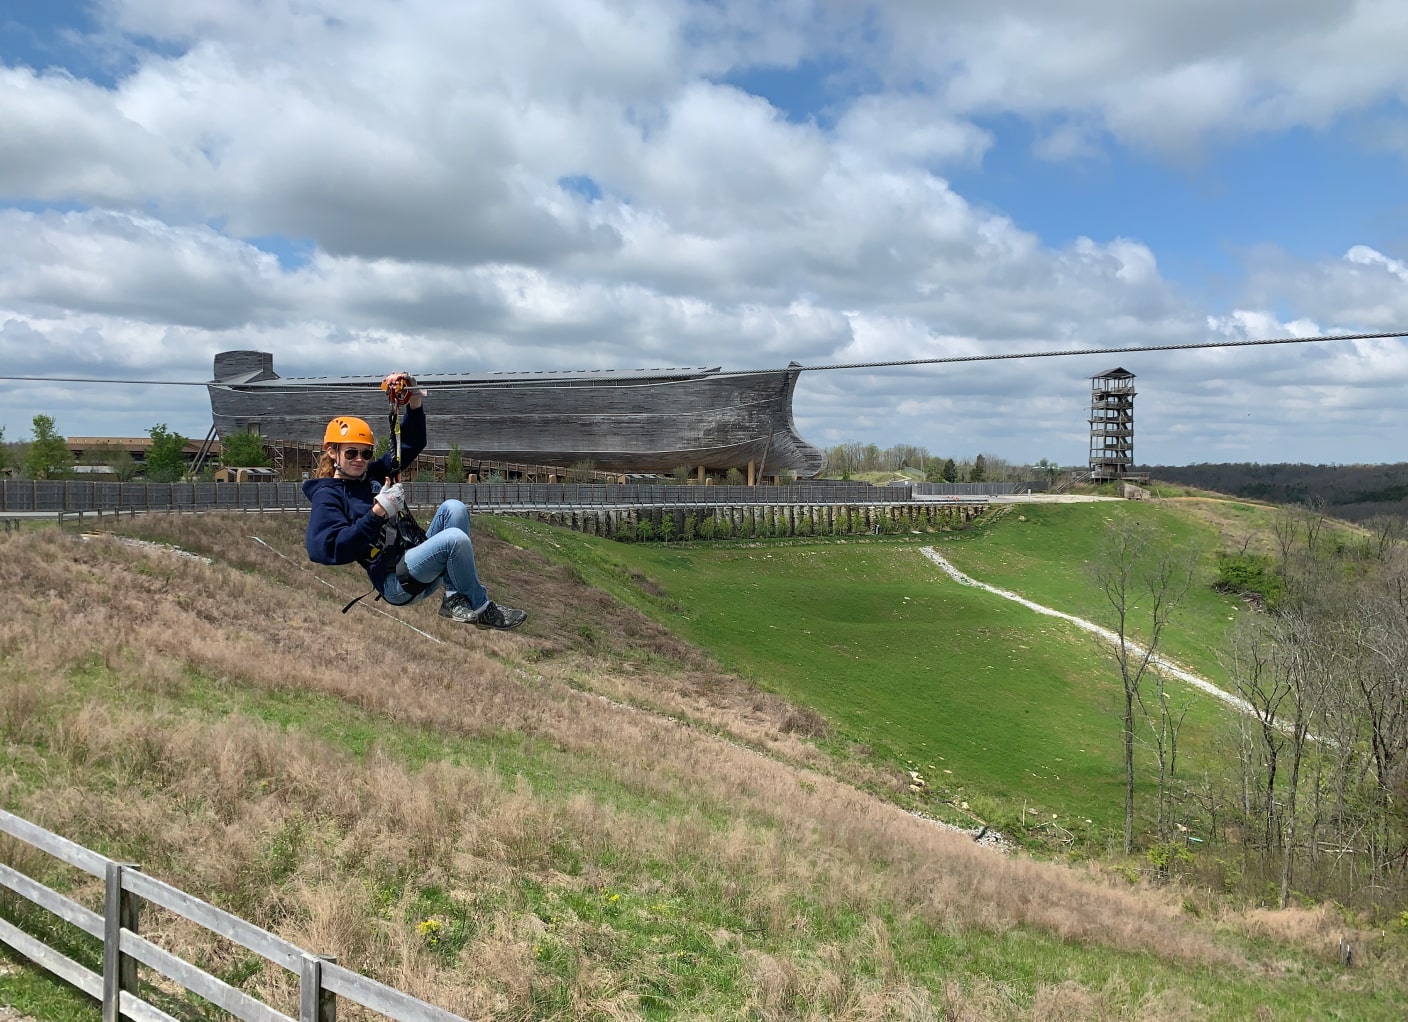 ziplining in kentucky at the ark